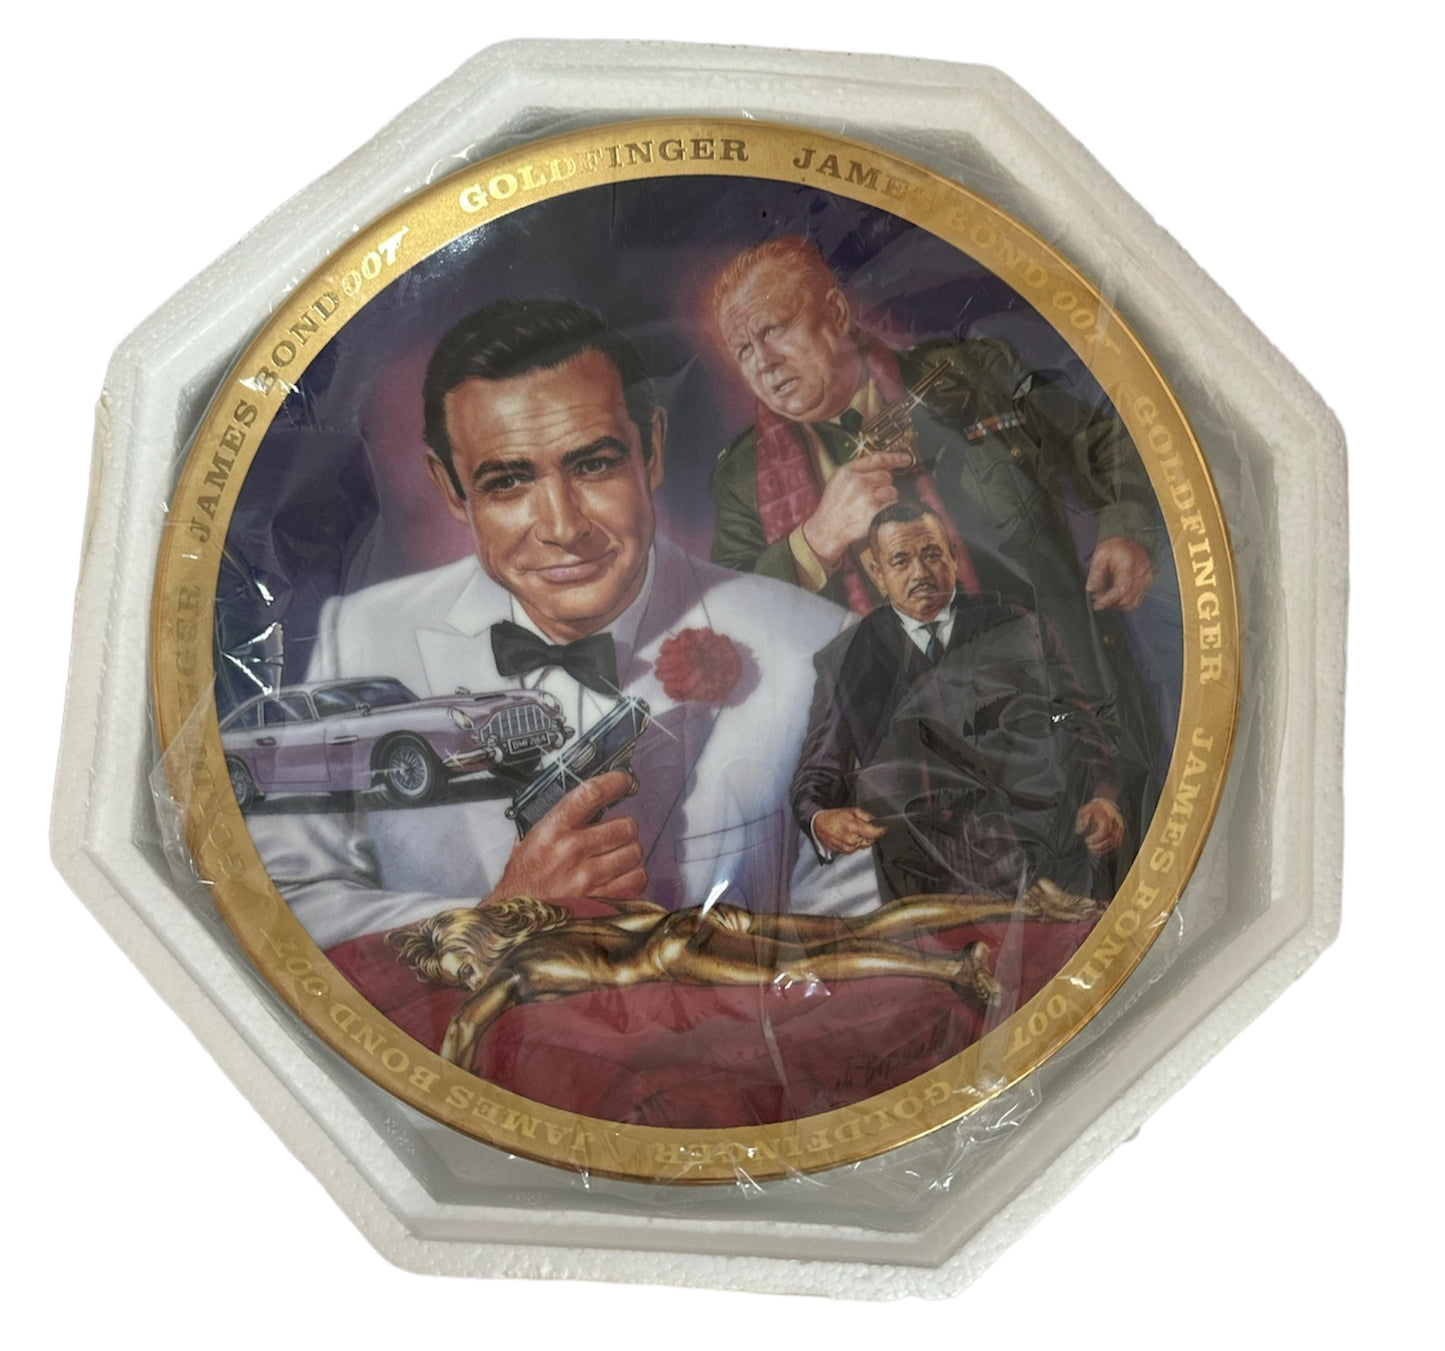 Vintage 1995 James Bond 007 Goldfinger Limited Edition Collectable Plate - Sean Connery, Gert Frobe & Harold Sakata - Shop Stock Room Find